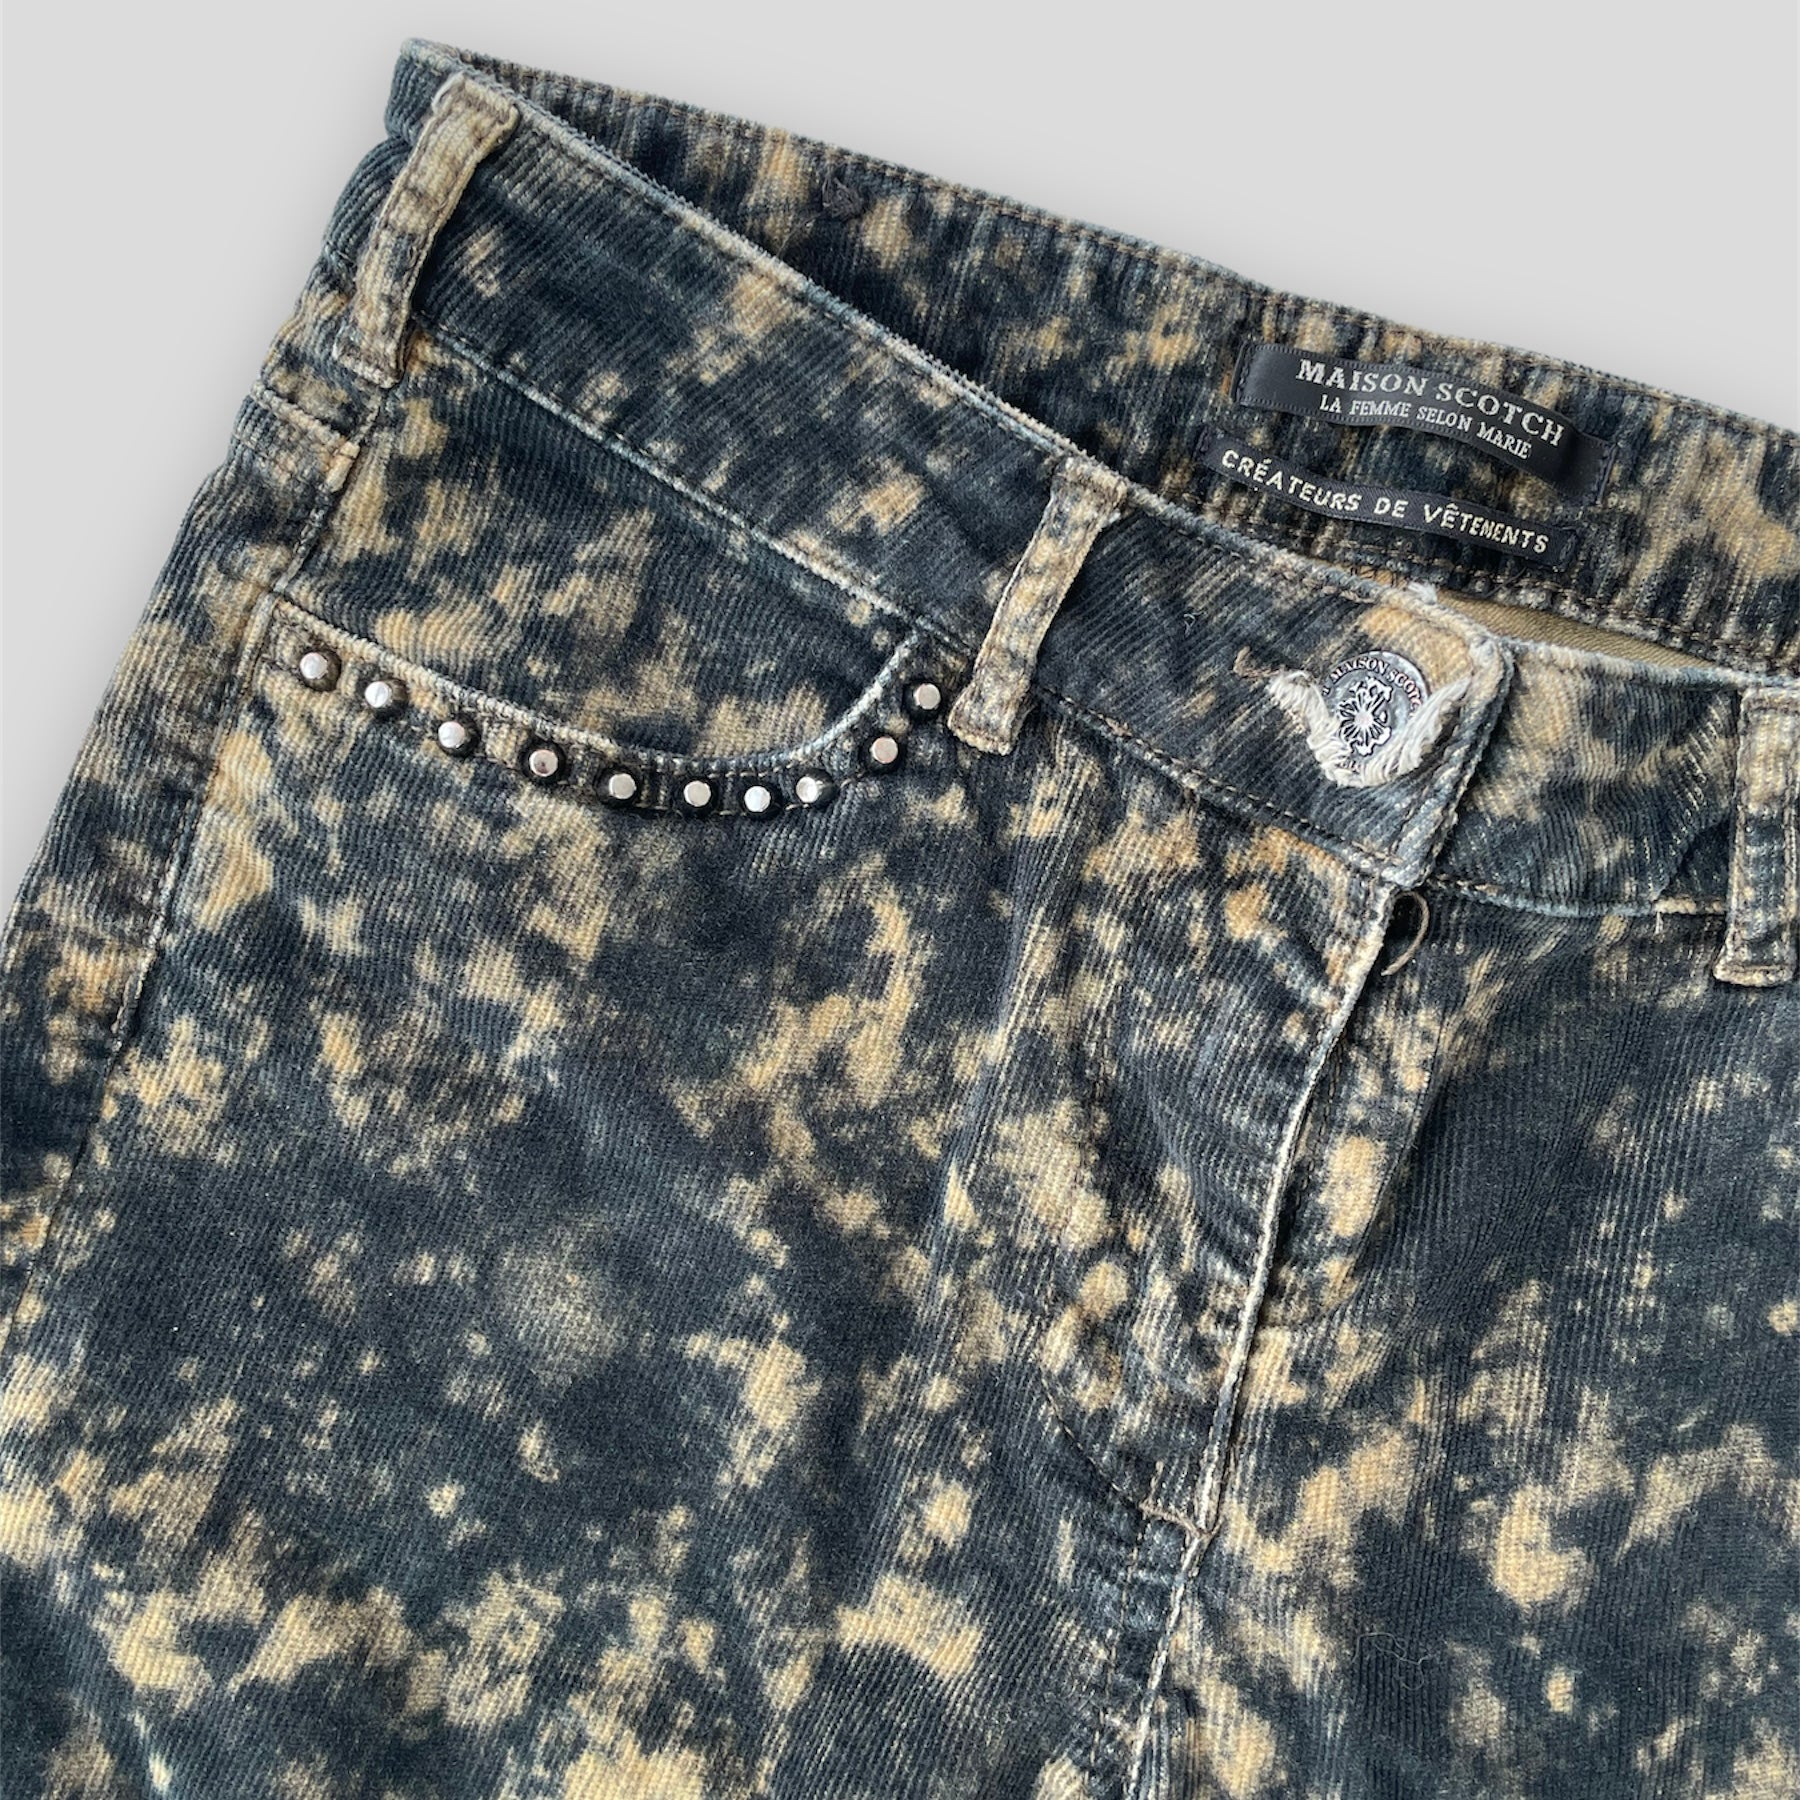 Levi Strauss Brown Corduroy Jeans - Large/W34 – Zoehify